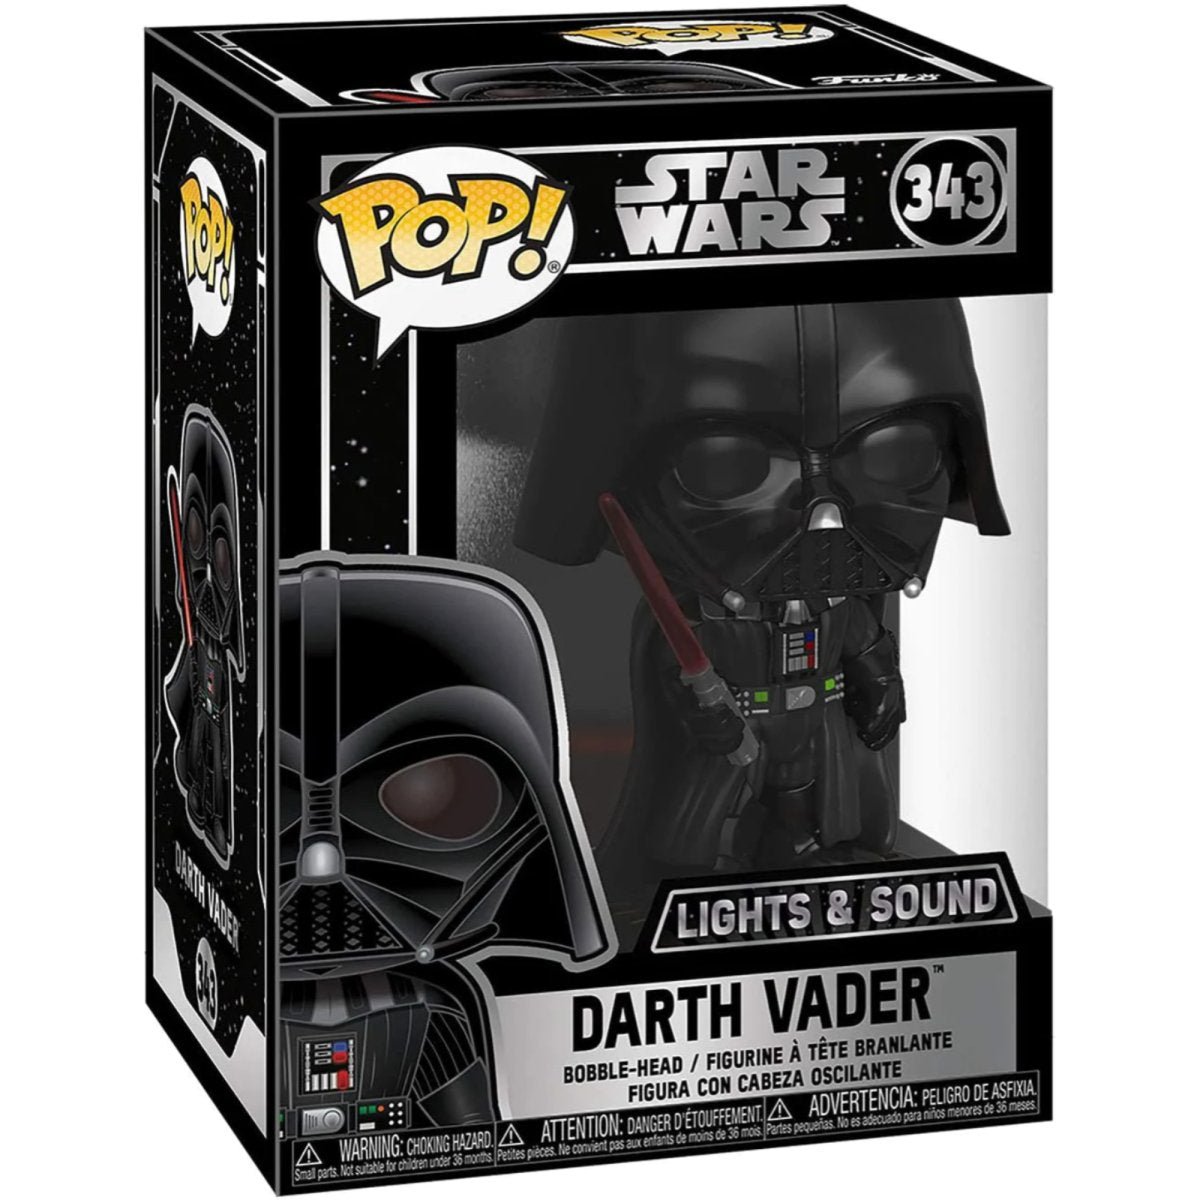 Star Wars - Darth Vader [Lights & Sound] #343 - Funko Pop! Vinyl Star Wars - Persona Toys